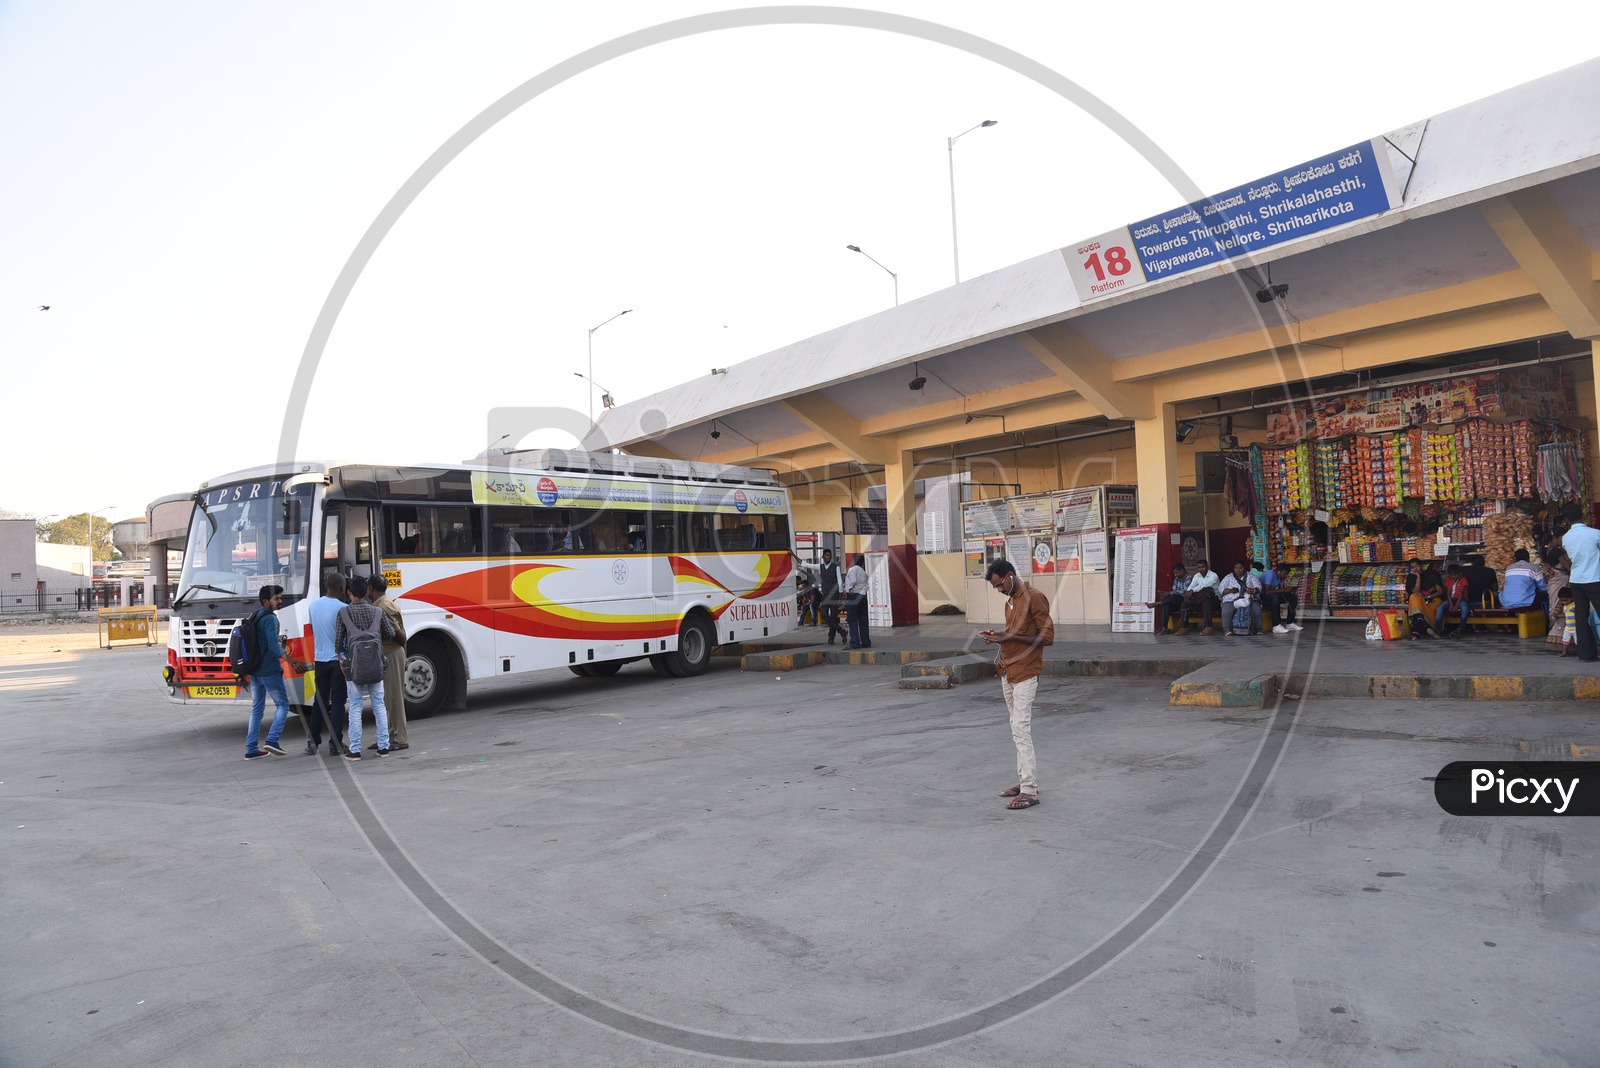 APSRTC super luxury bus at platform 18 in Kempegowda majestic bus stand. Tirupati, srikalahasthi, vijayawada, nellore, sriharikota platform.